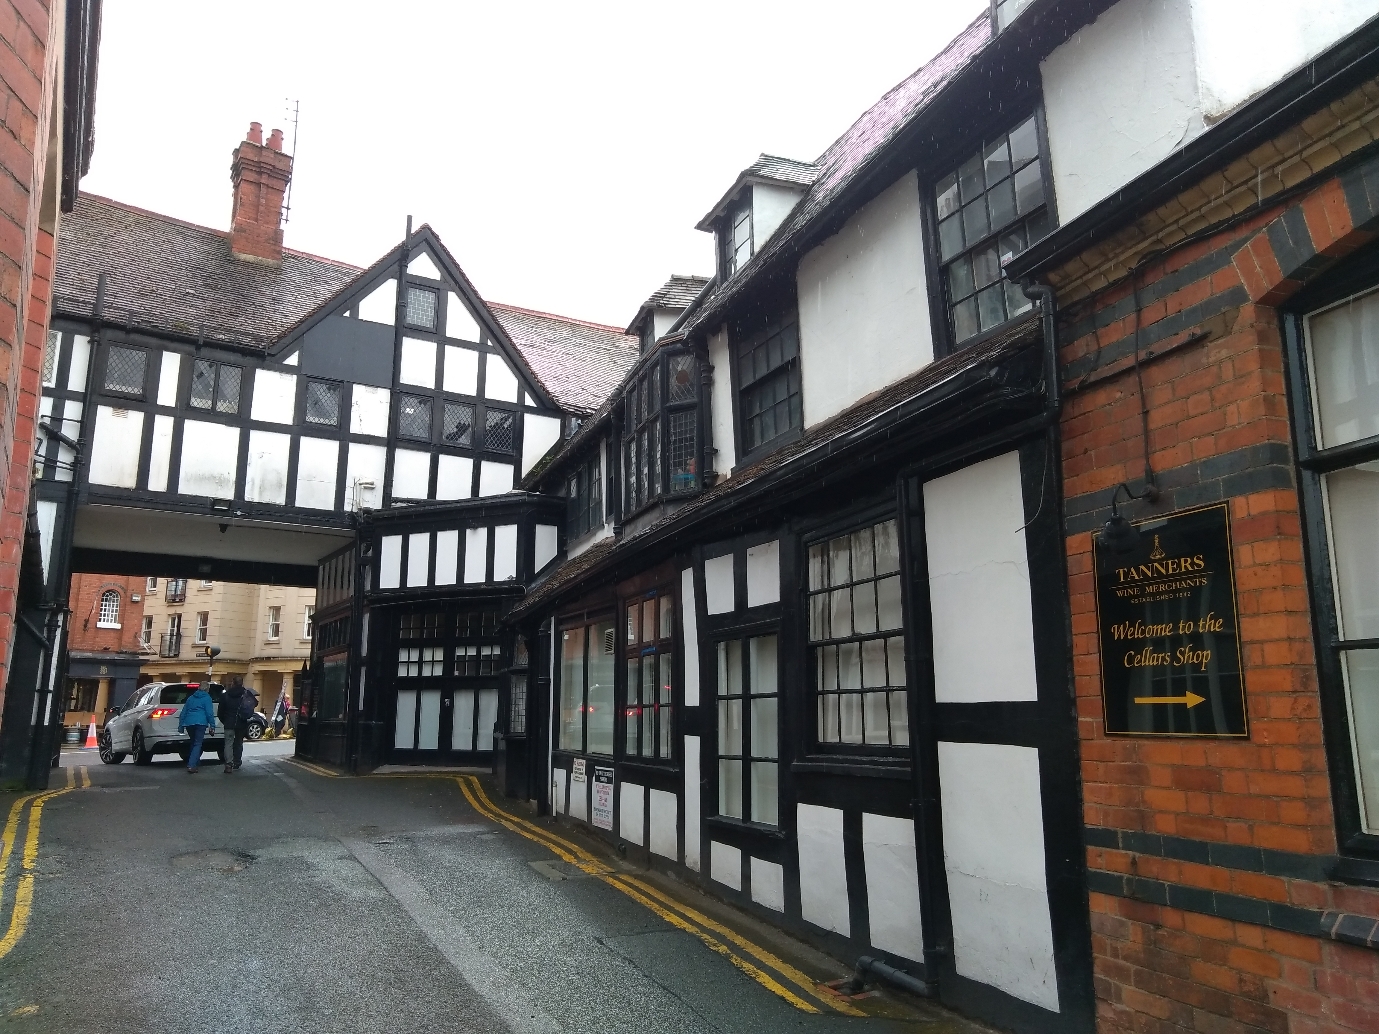 Shrewsbury Medieval Courtyard